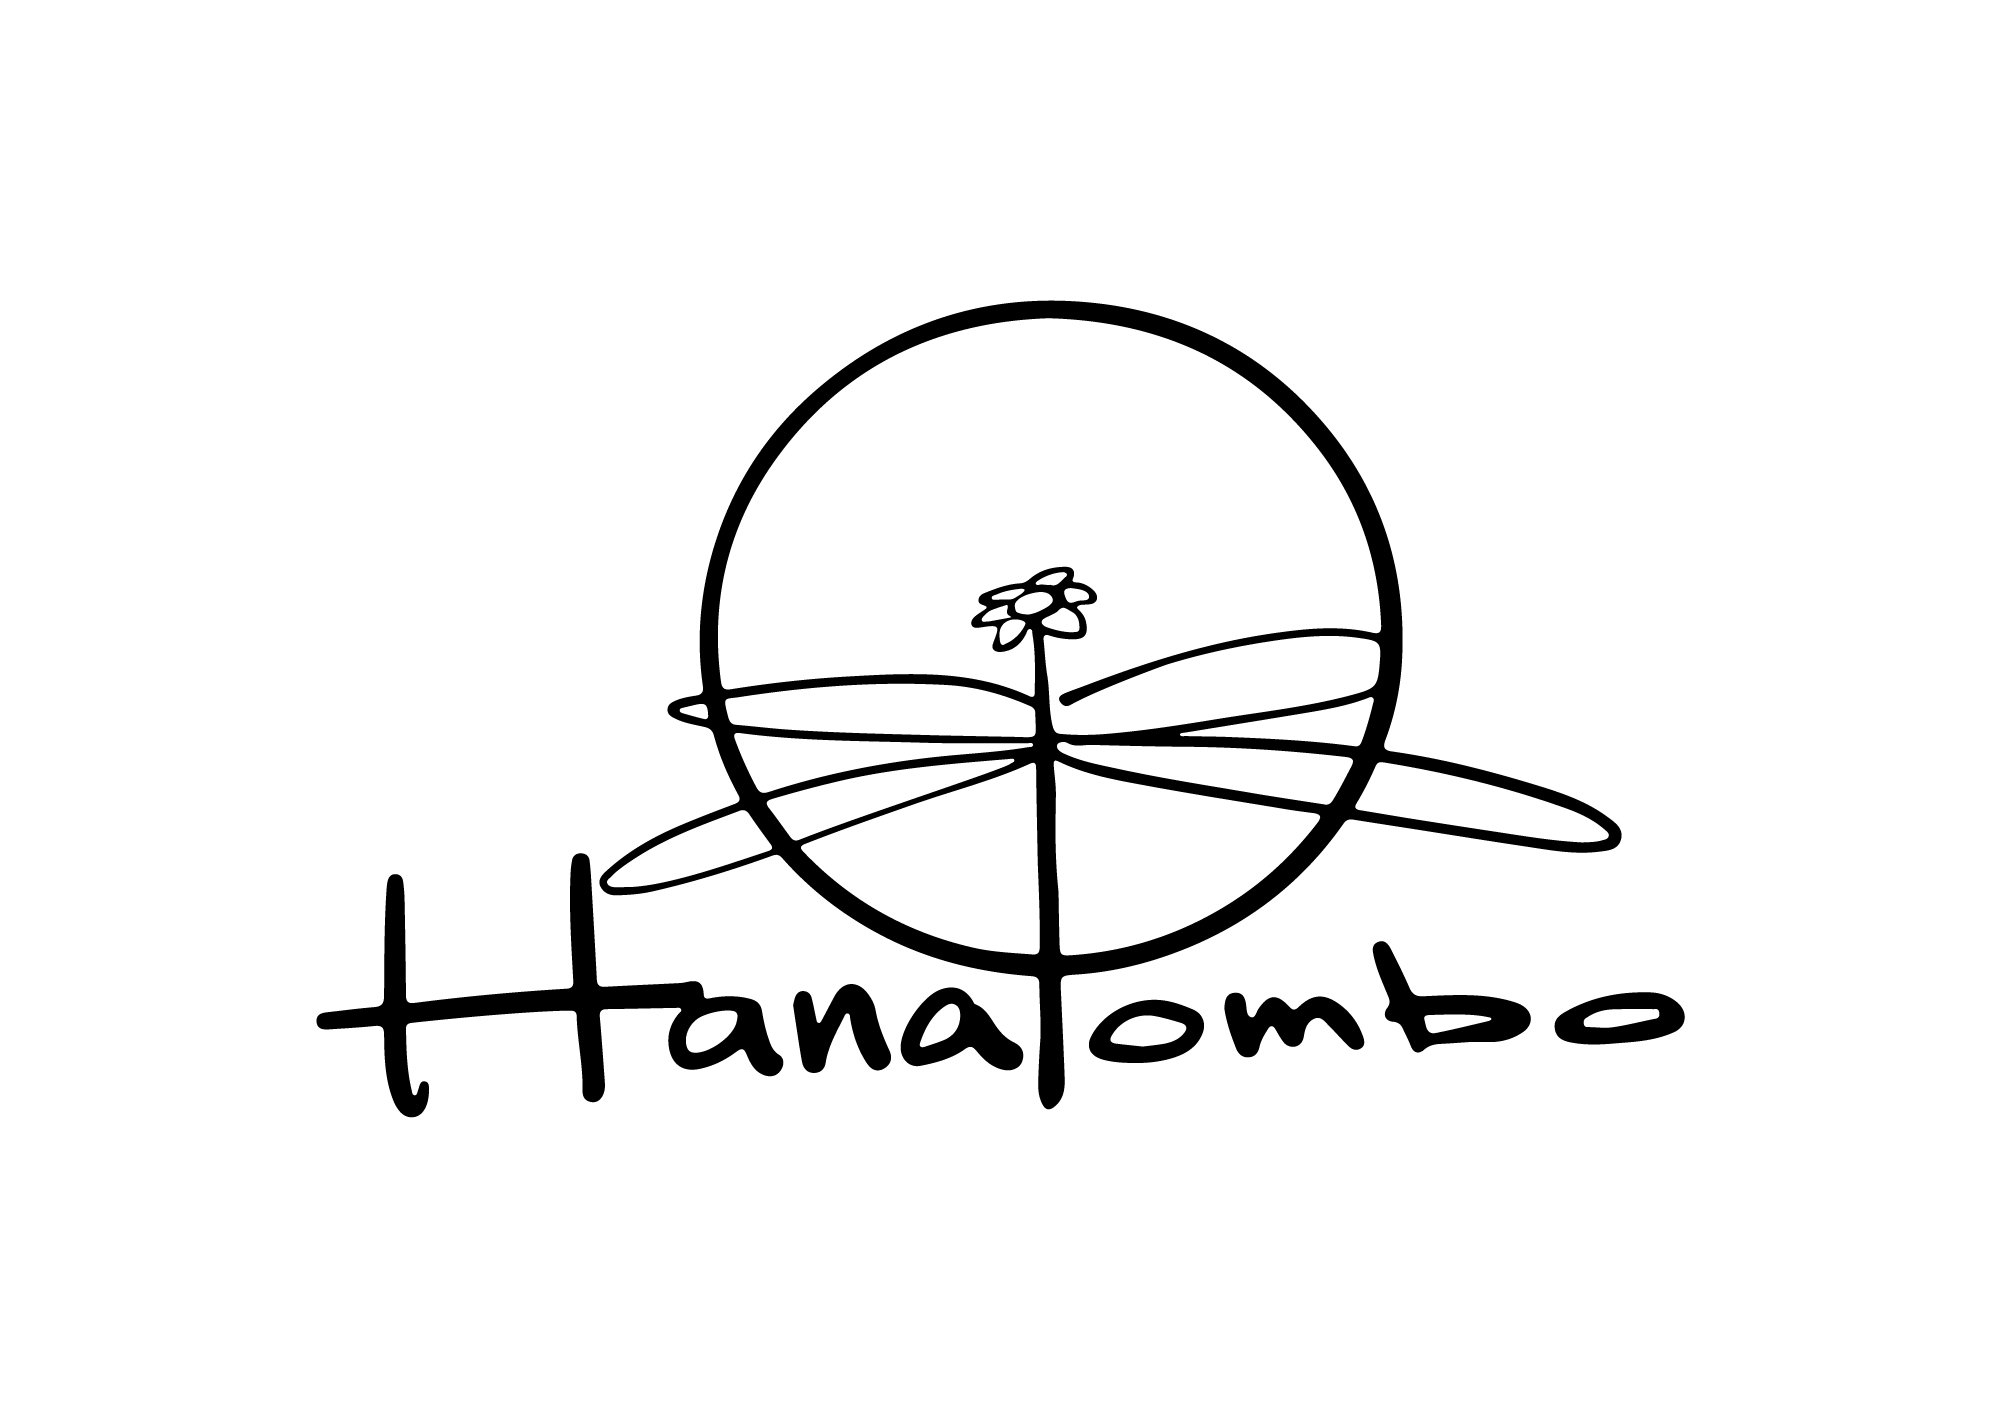 hanatombo